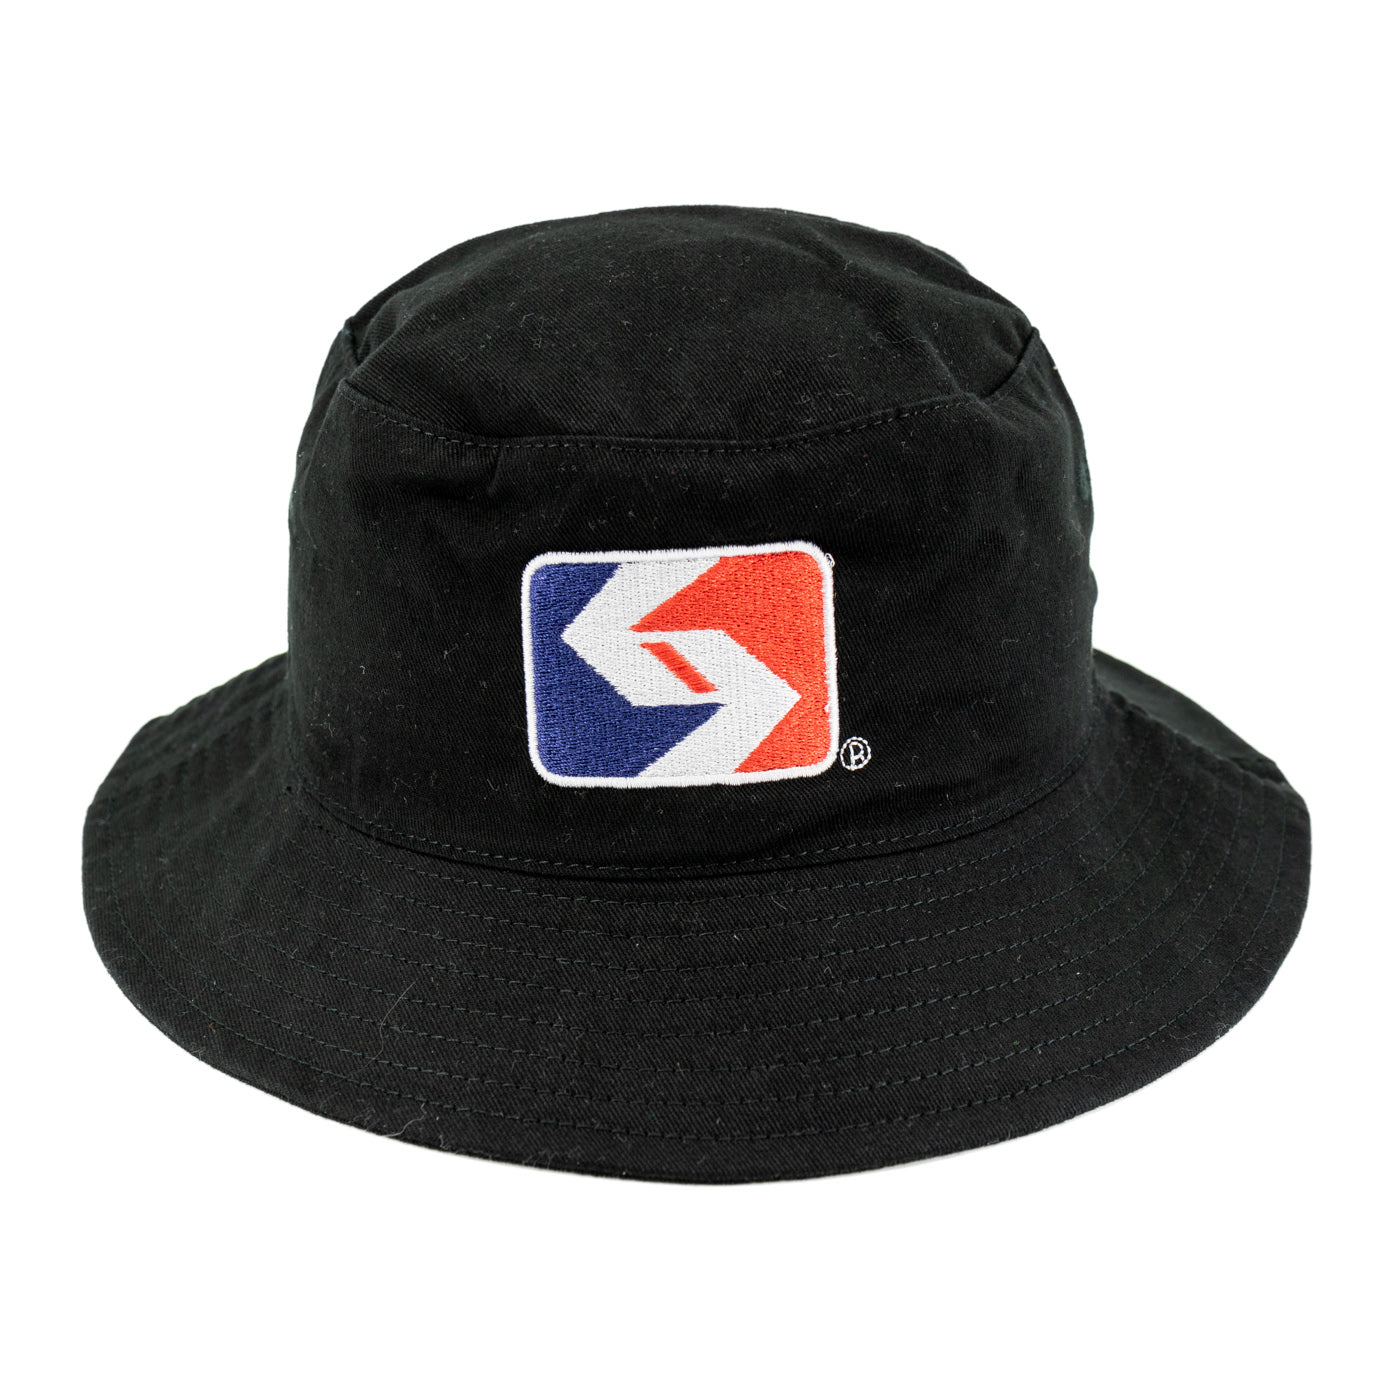 SEPTA Bucket Hat - Black